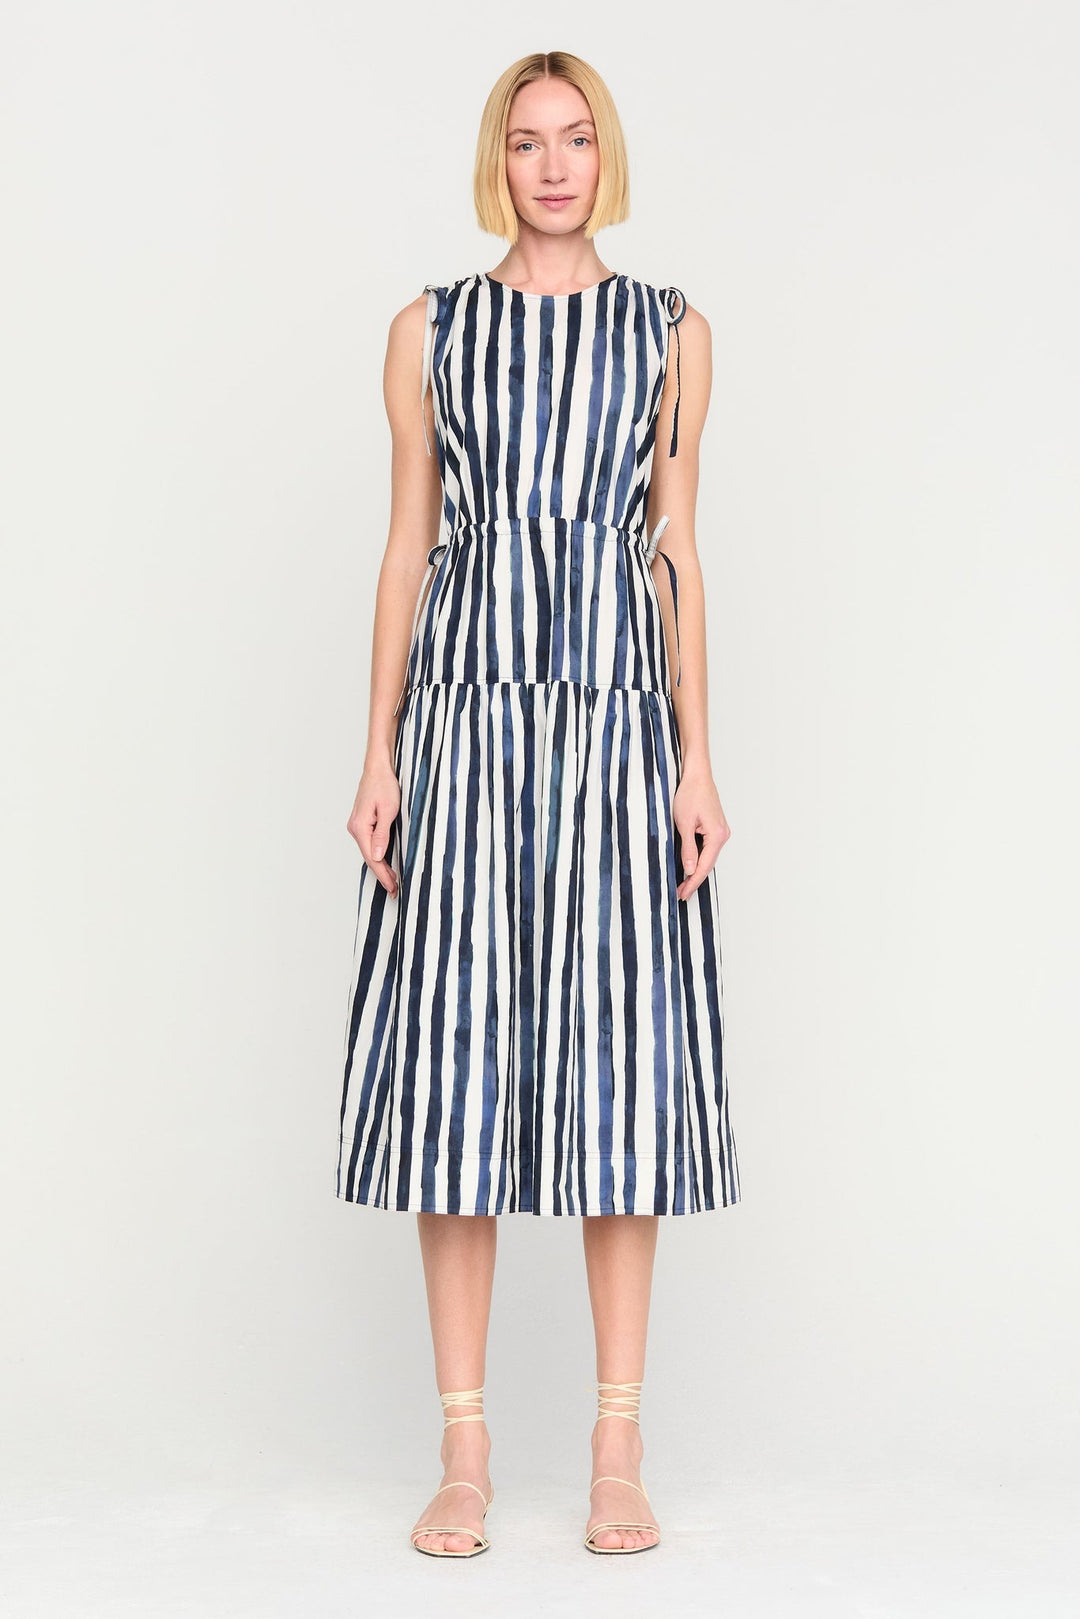 Marie Oliver - Elenora Dress: Blazer Stripe - Shorely Chic Boutique